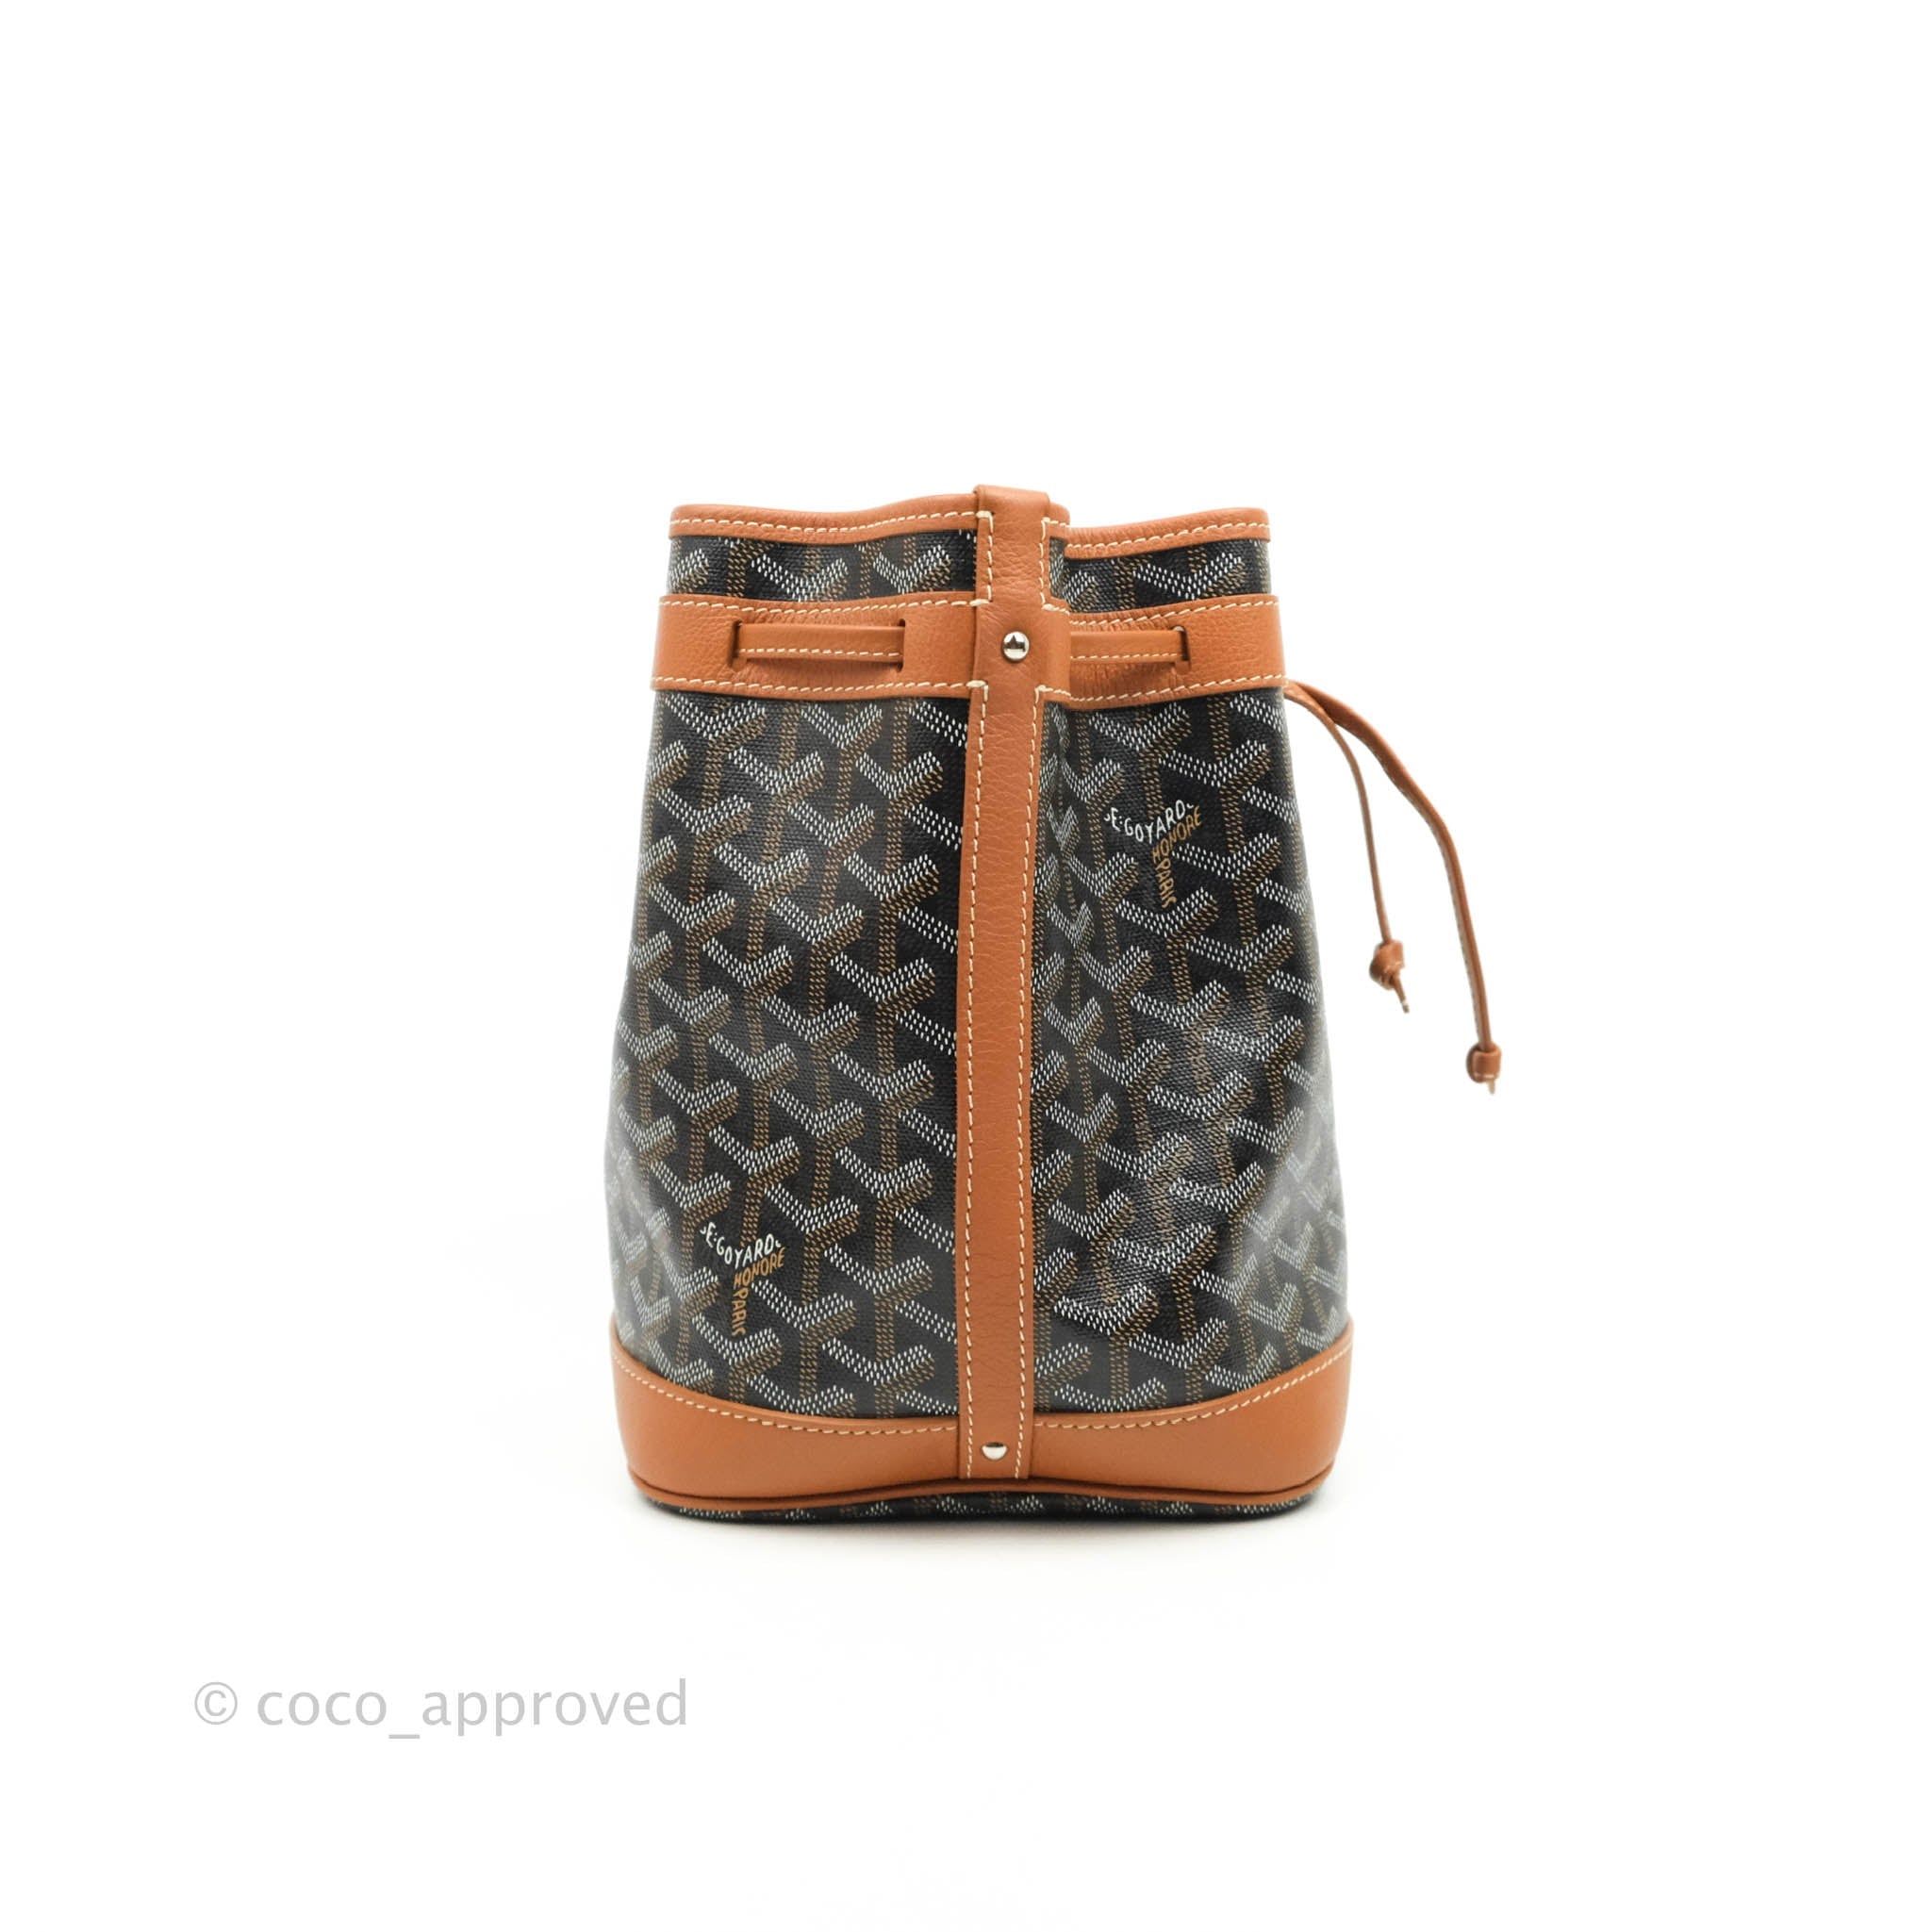 Goyard Bag – Zohrascrafts